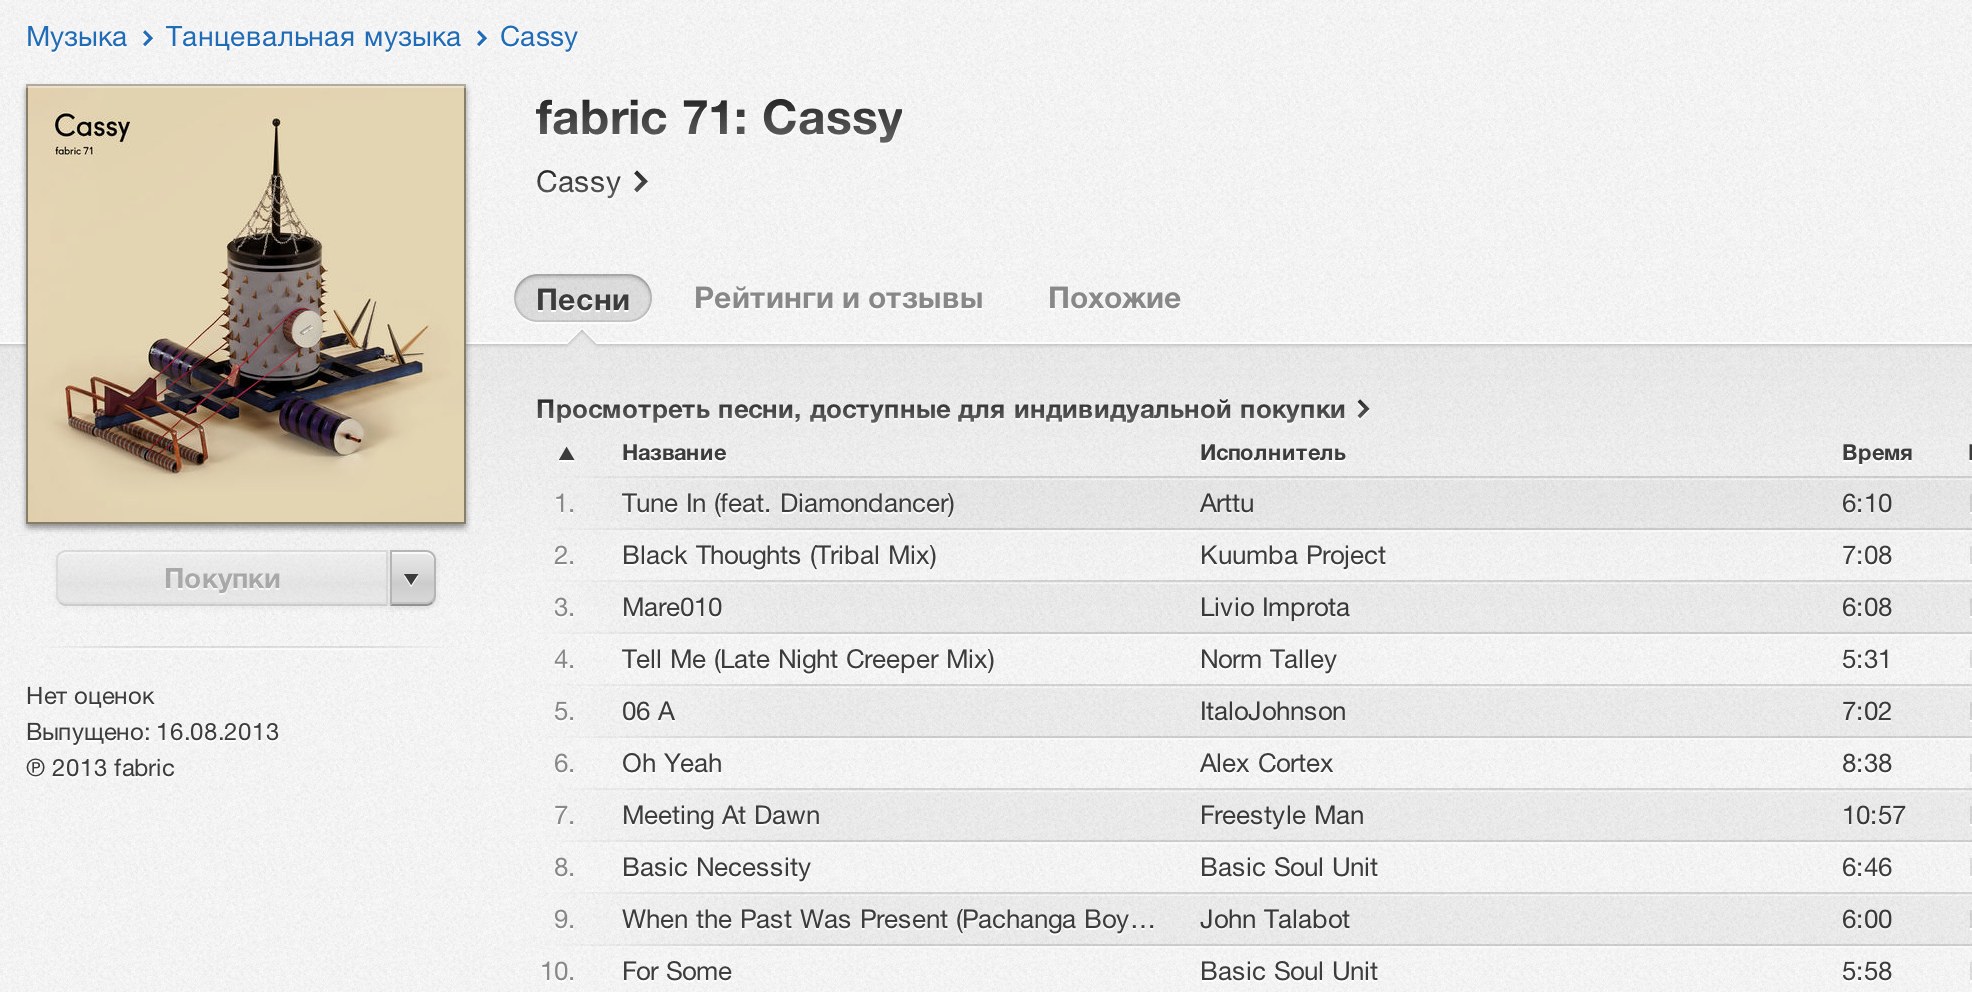 fabric 71/Cassy